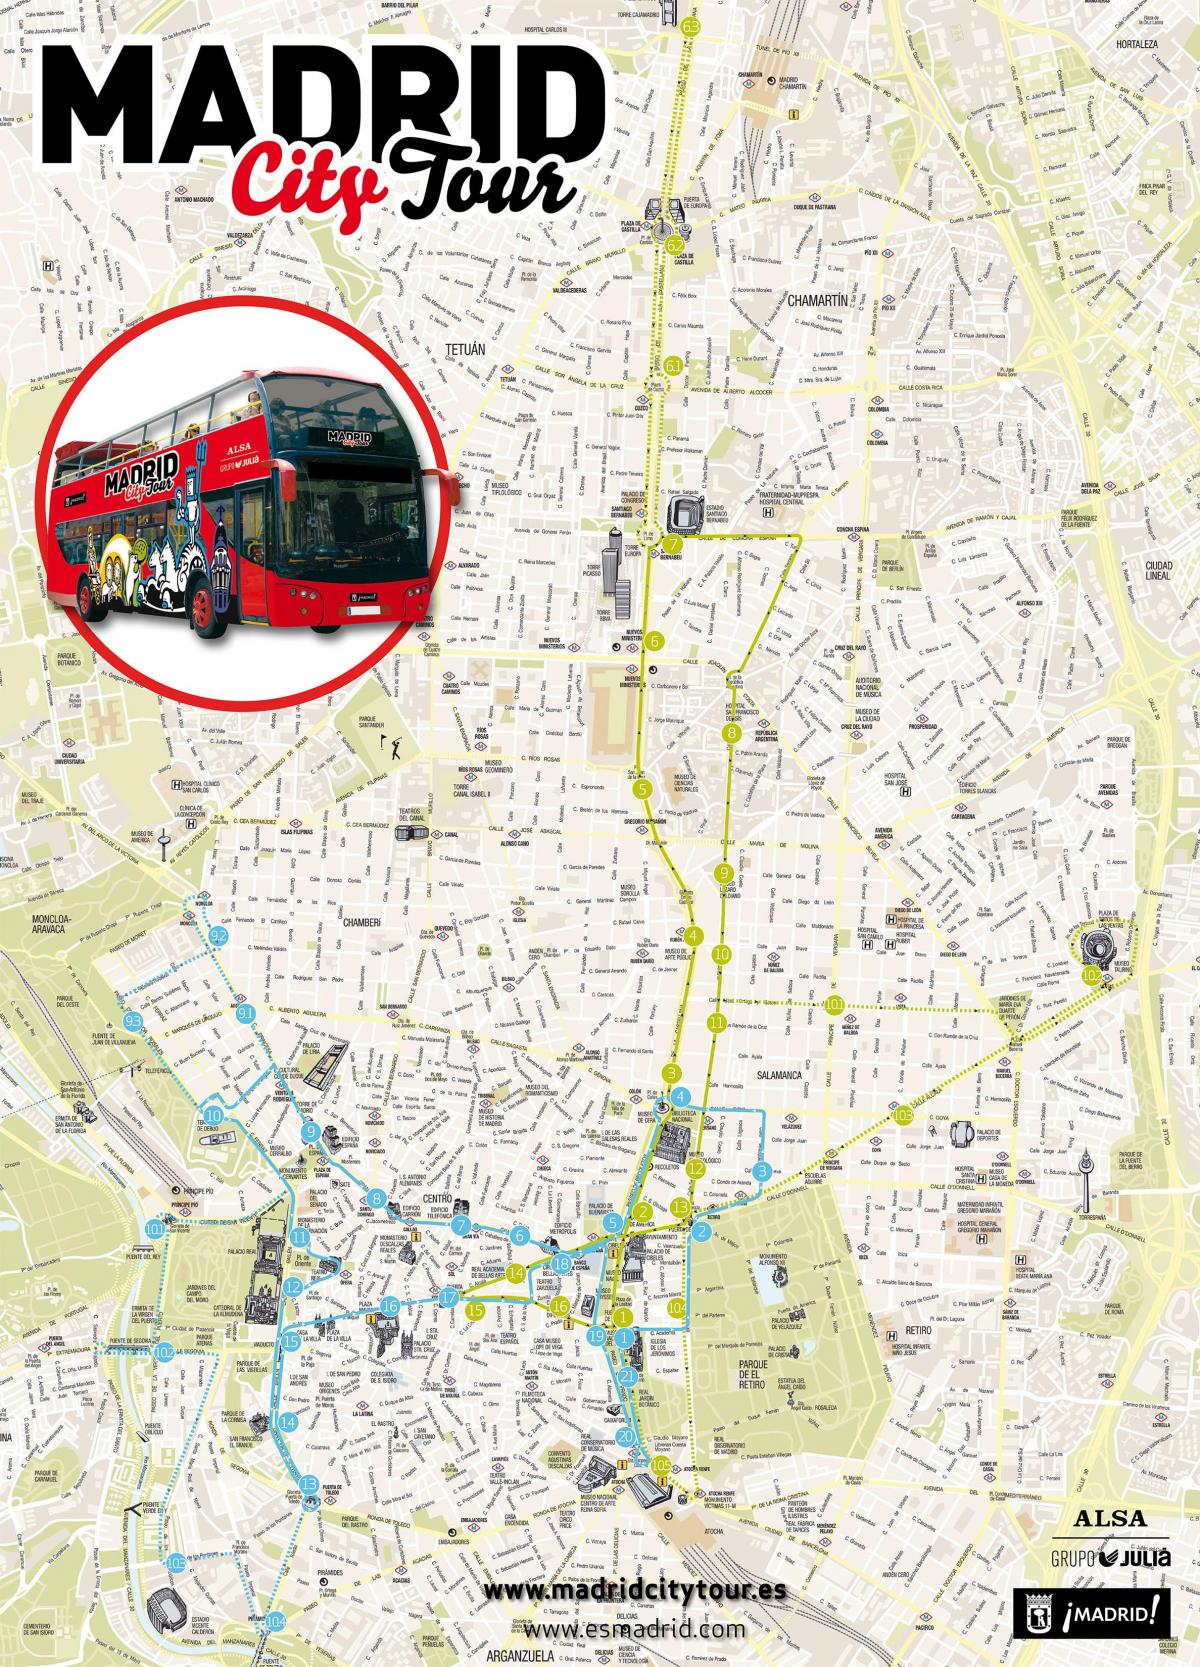 Madrid city tour bus mappa